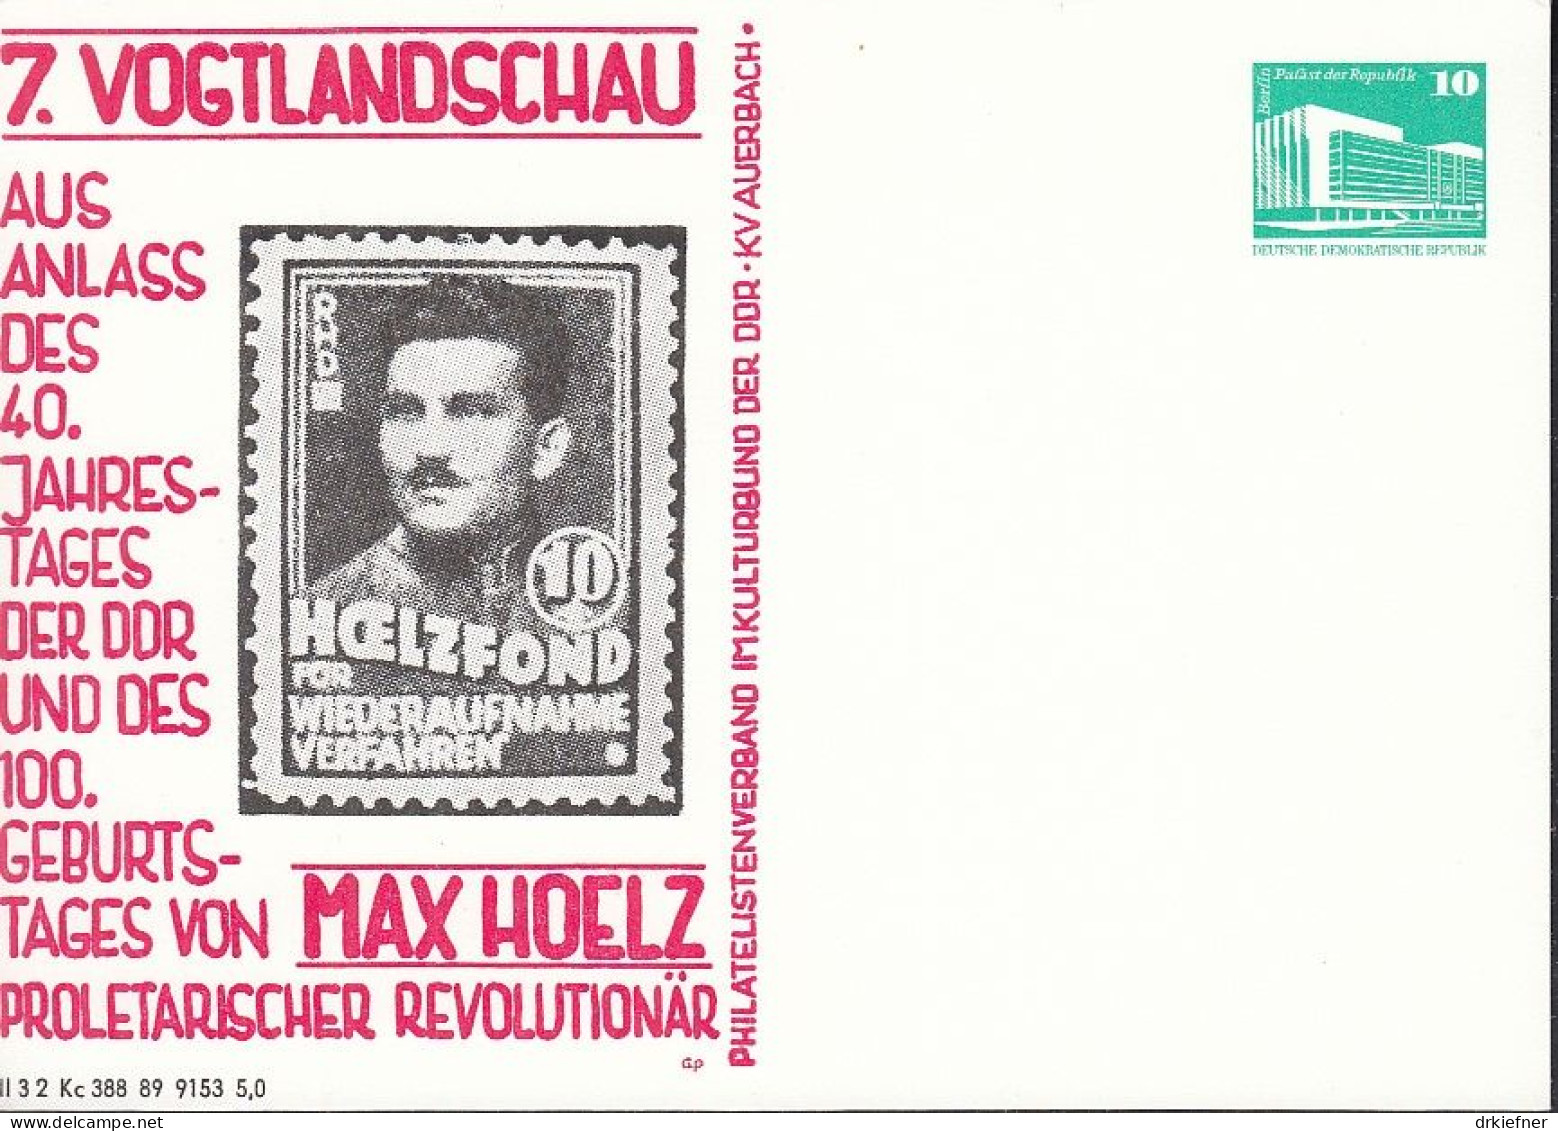 DDR PP 18, Ungebraucht, Max Hoelz, 7. Vogtlandschau, Auerbach 1989 - Private Postcards - Mint